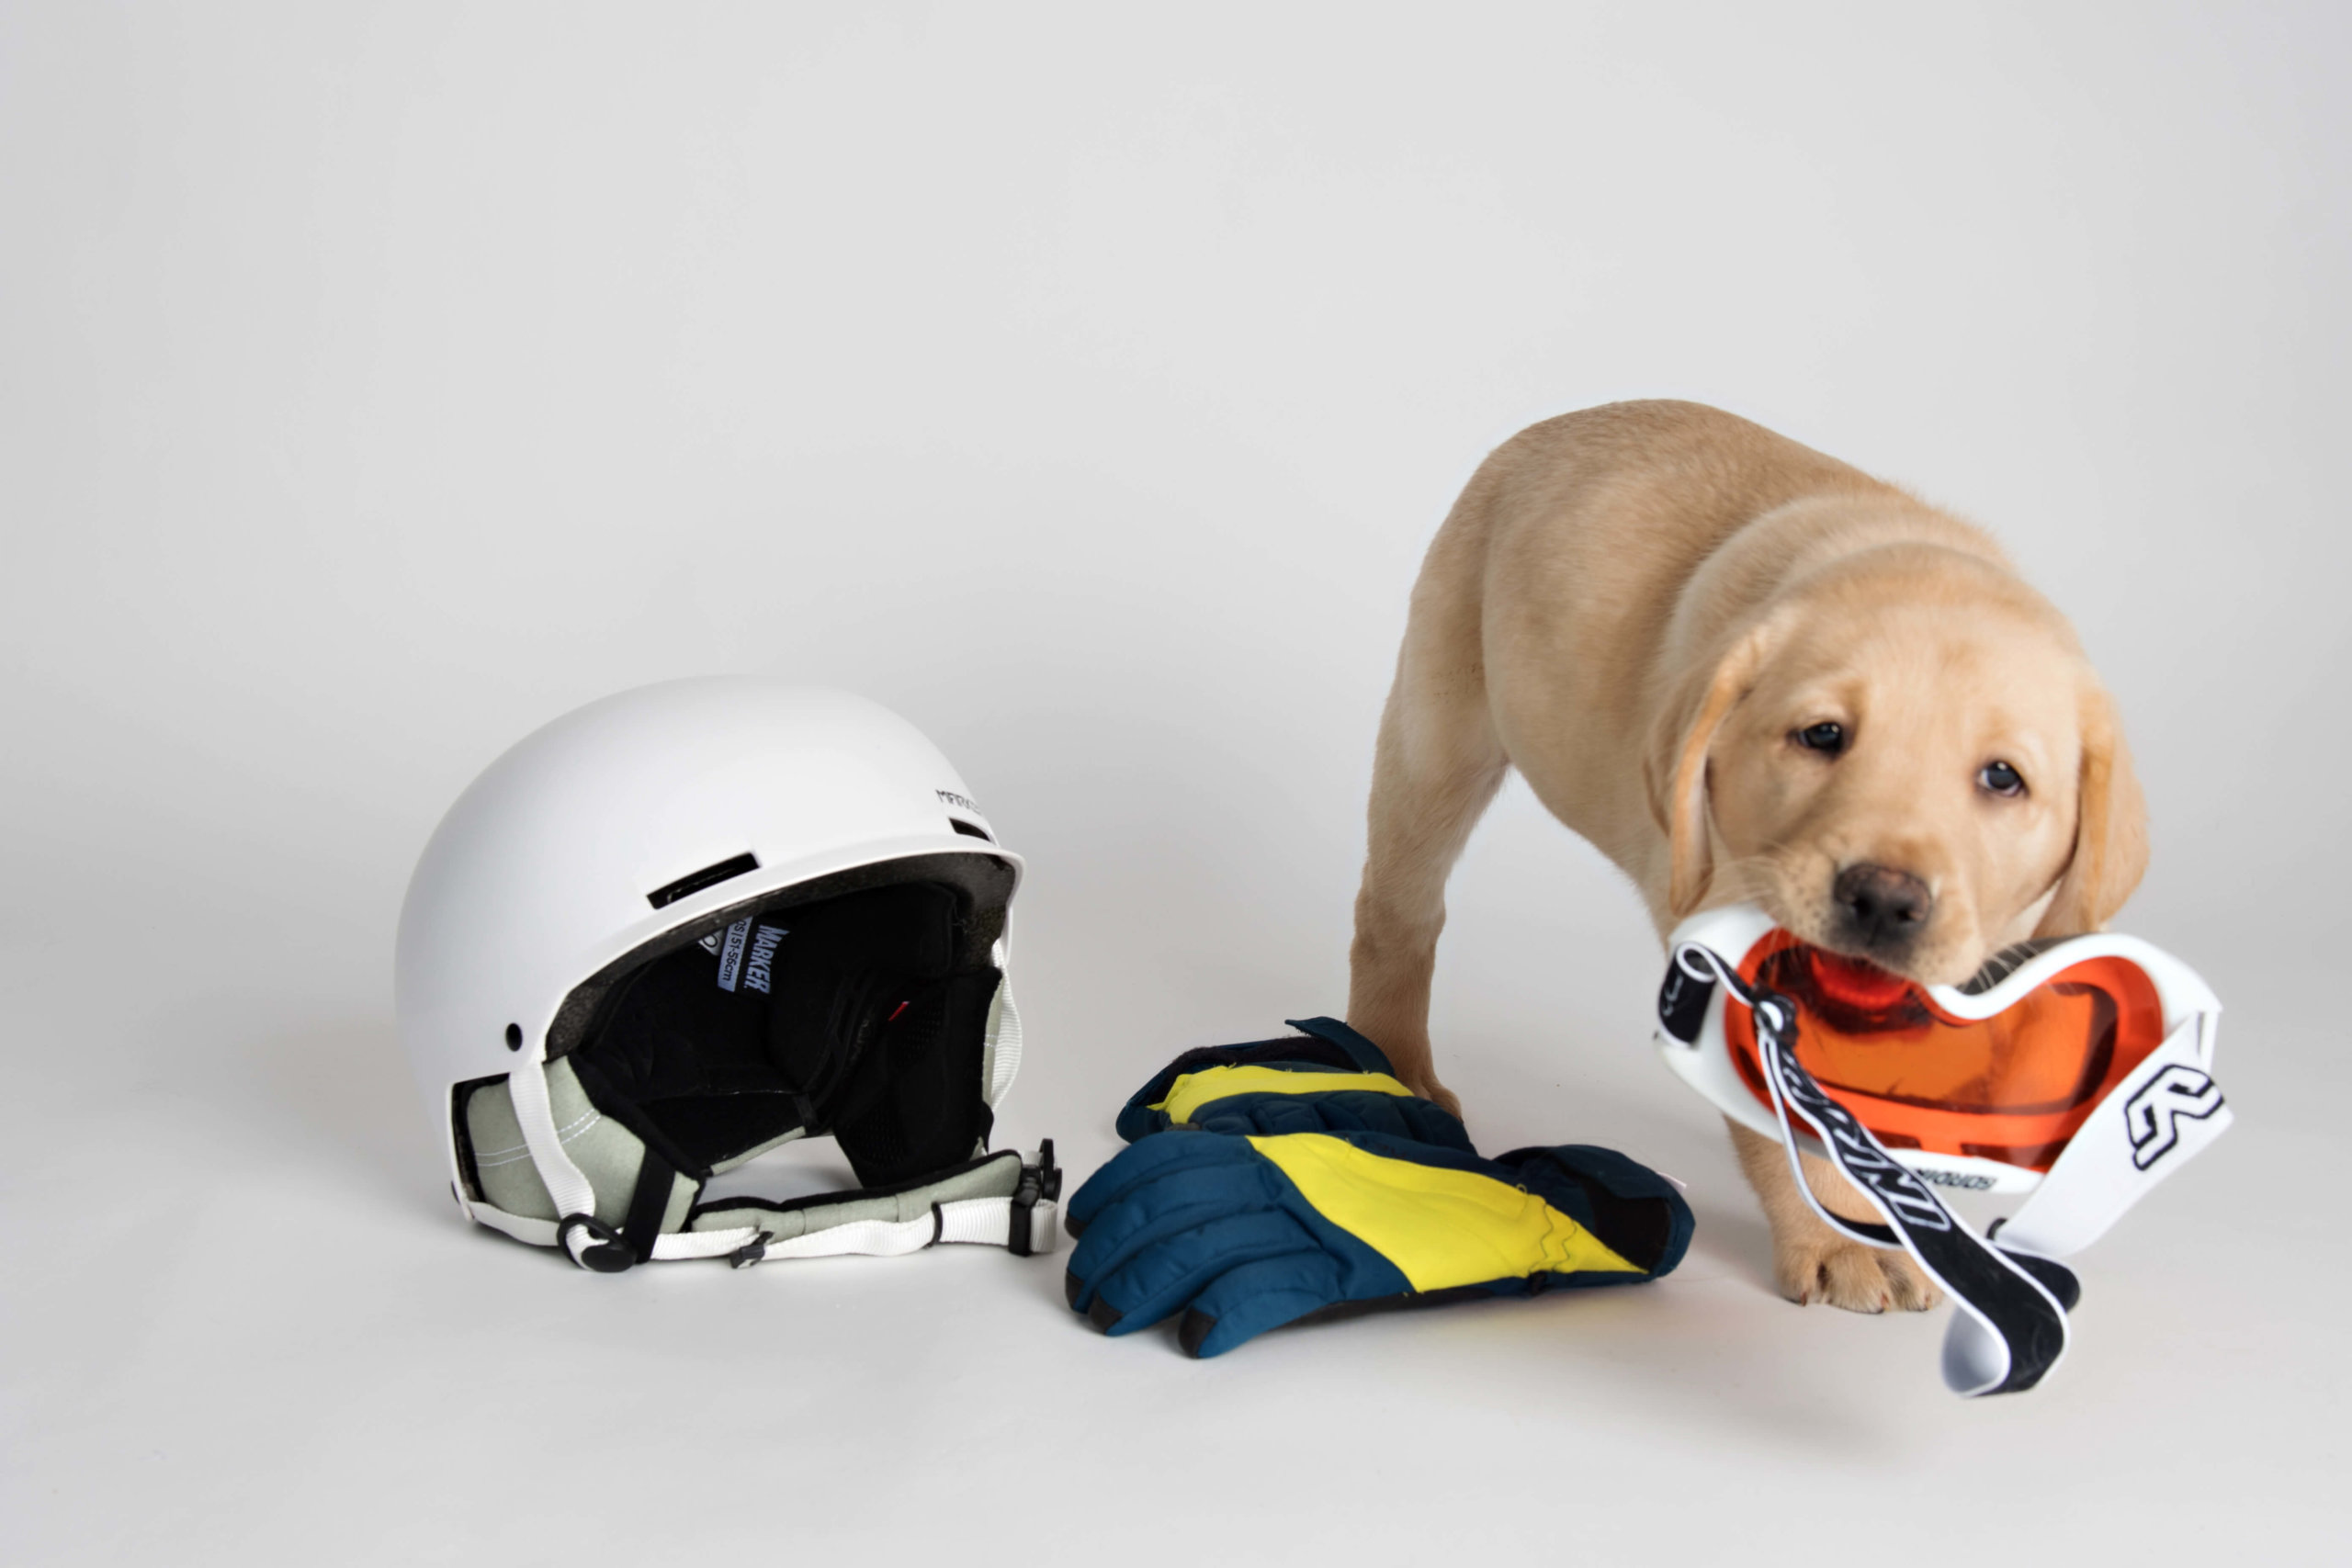 Puppy Kim prepares for equipment and hunts for snacks inside her helmet. 